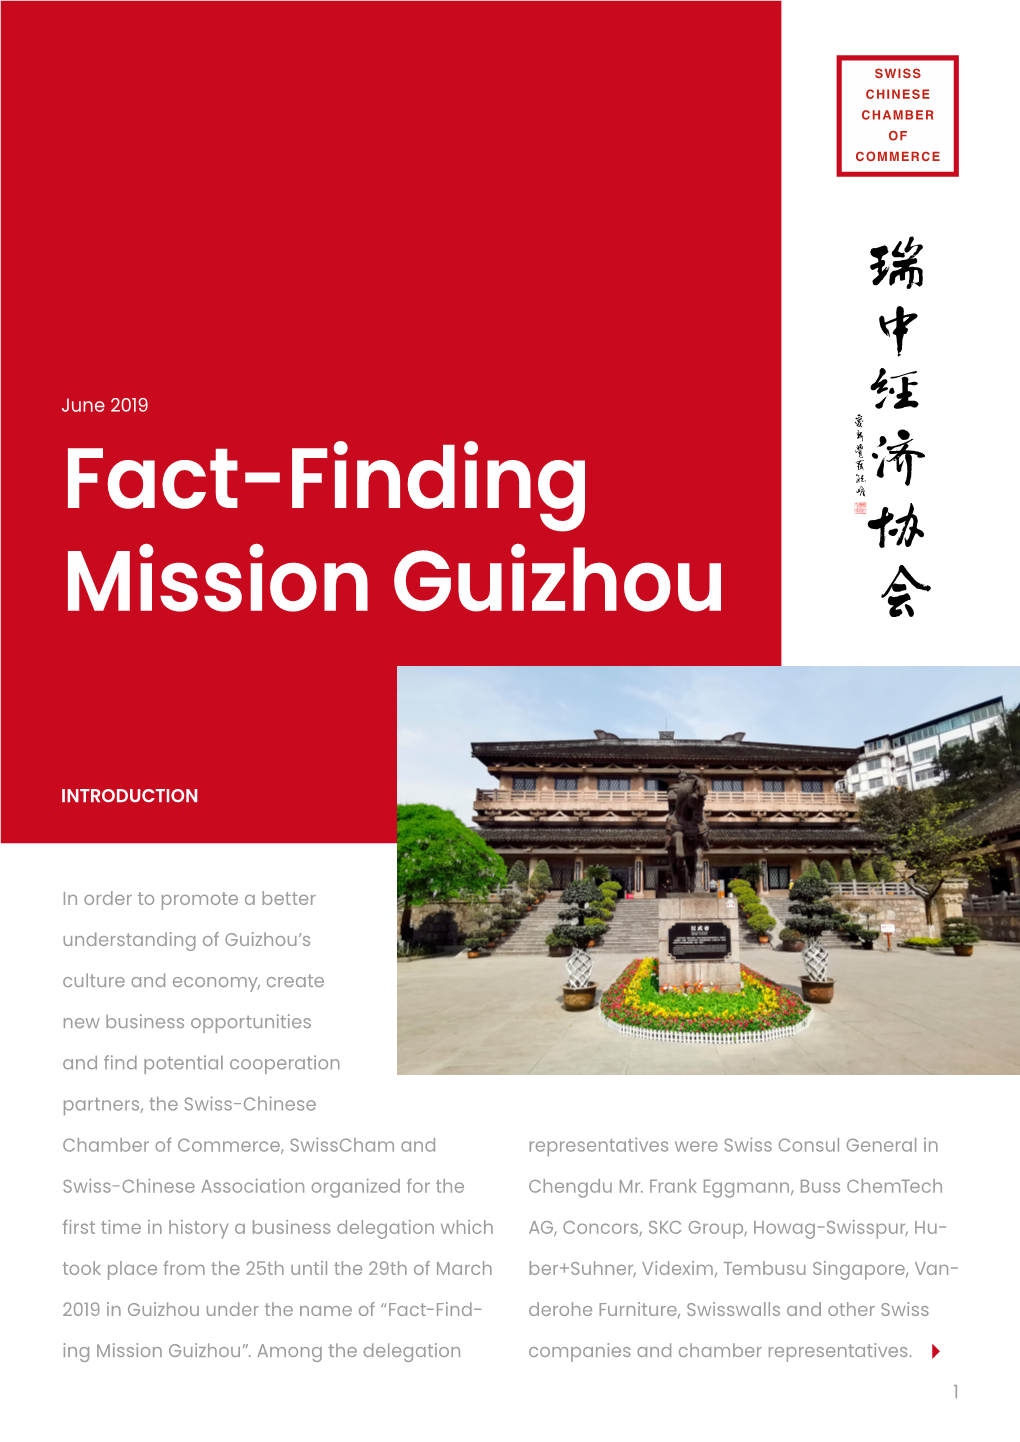 Fact-Finding Mission Guizhou